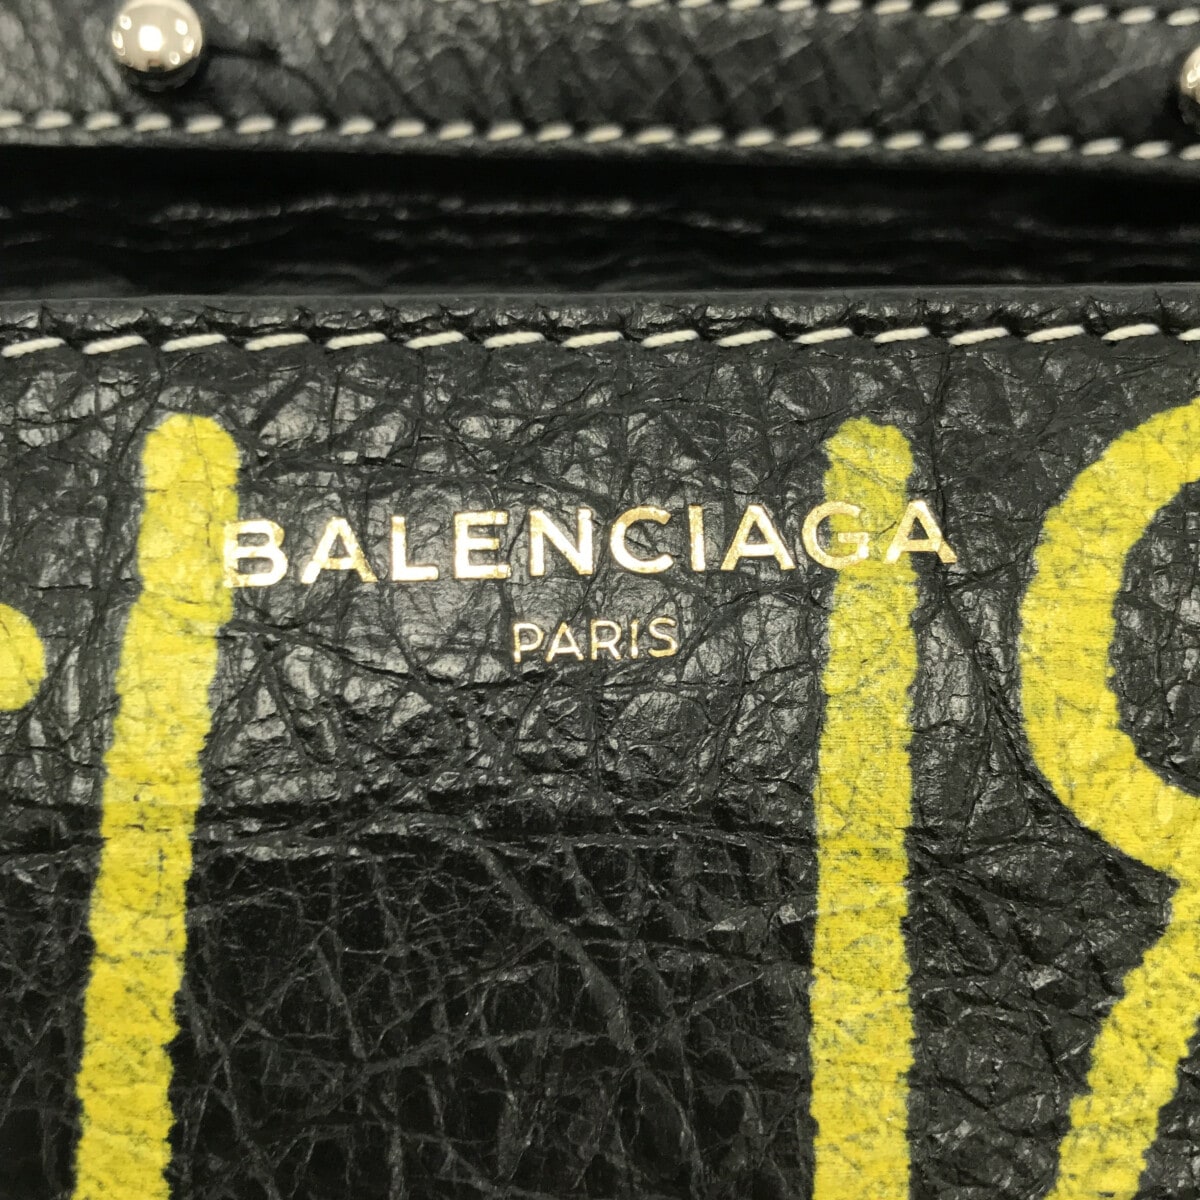 Black Balenciaga Graffiti Bazar Wallet on Chain Crossbody Bag